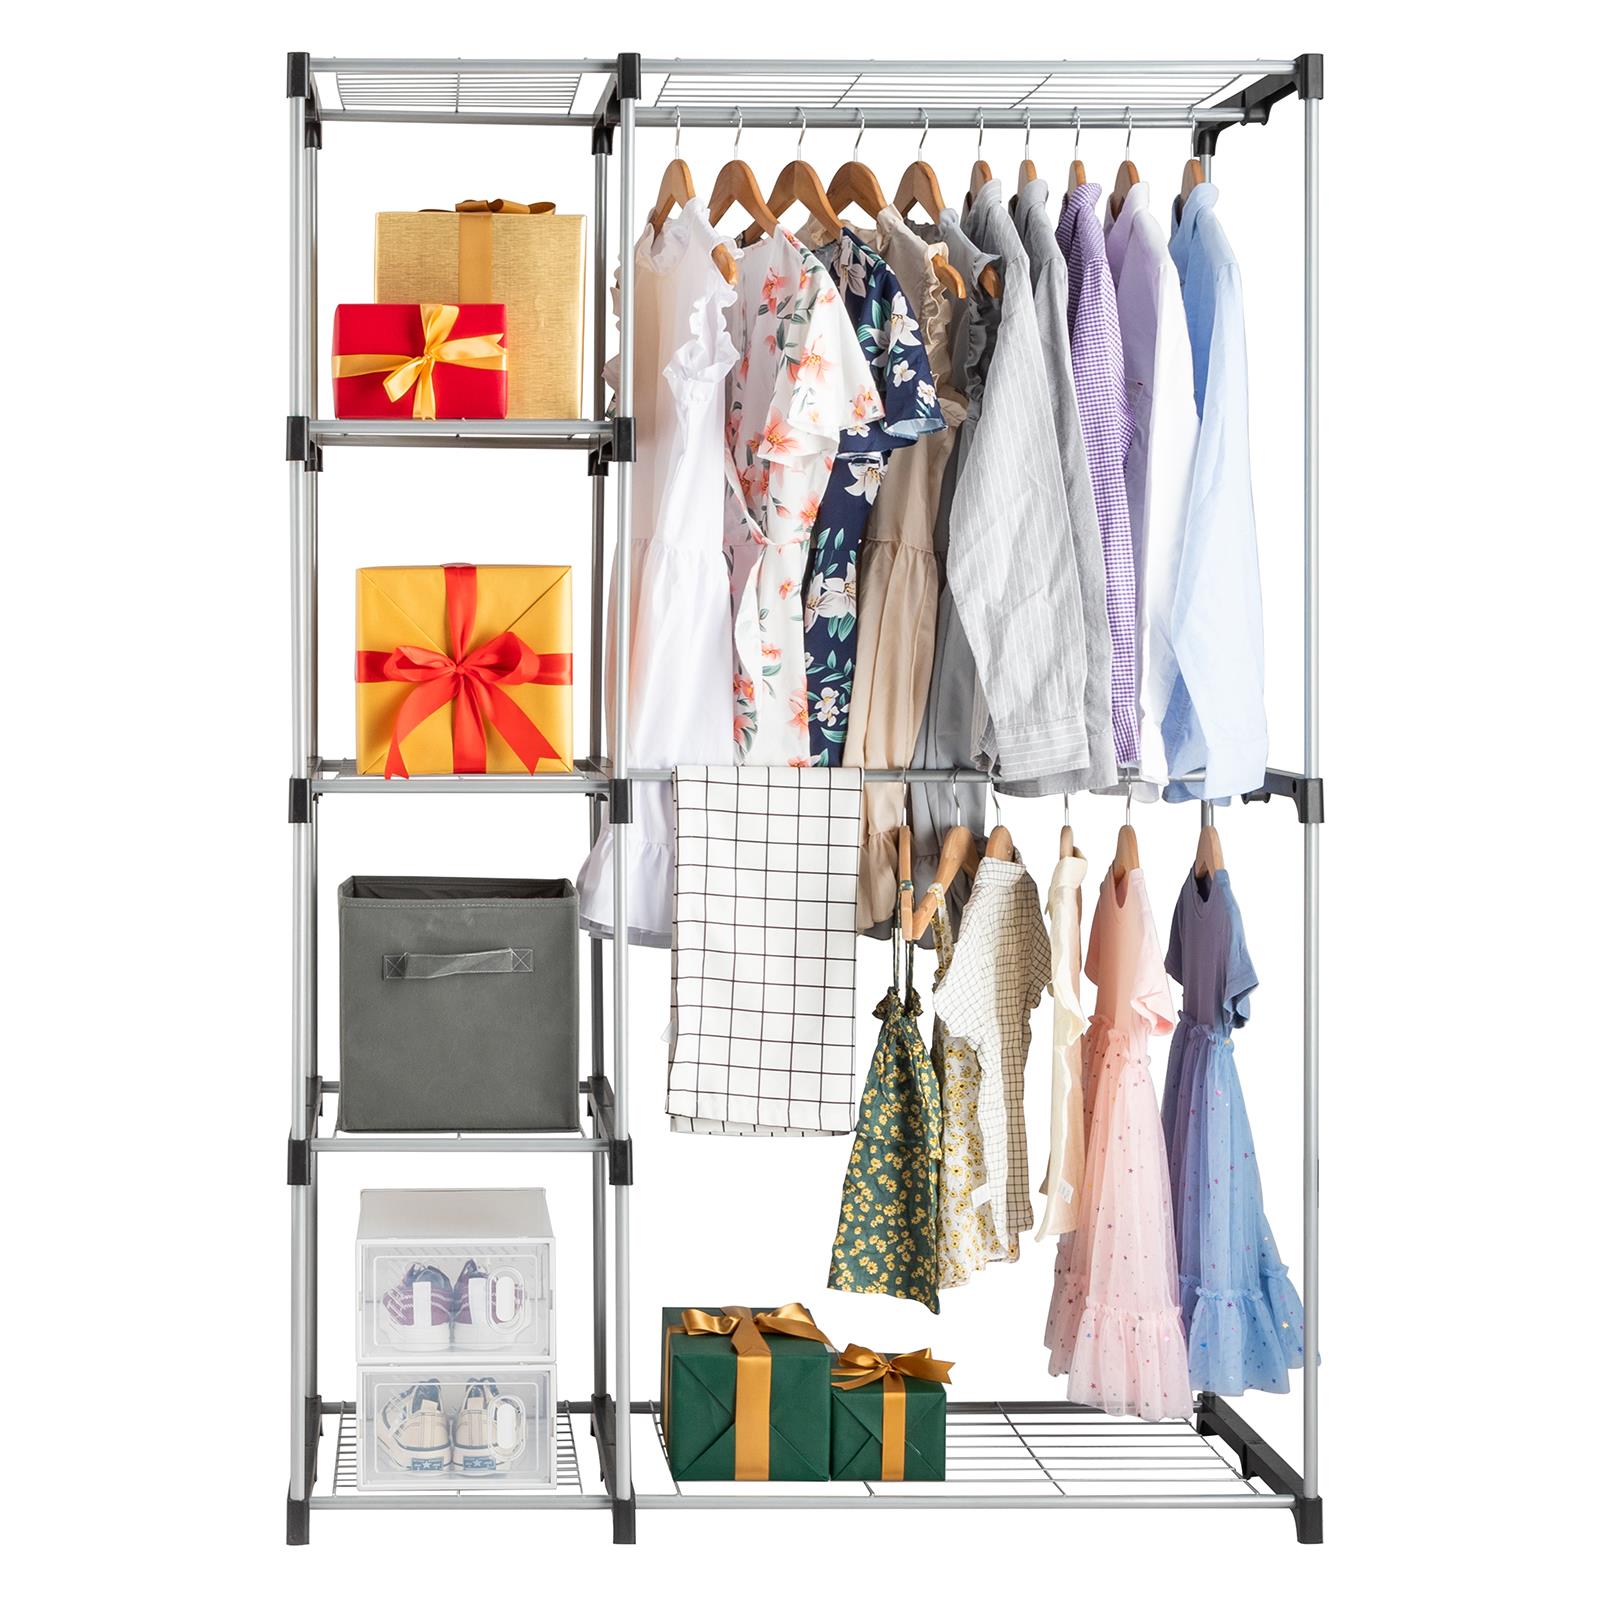 Zimtown Silver Portable Closet Organizer Storage Clothes Hanger Garment Shelf Rail Rack - image 3 of 13